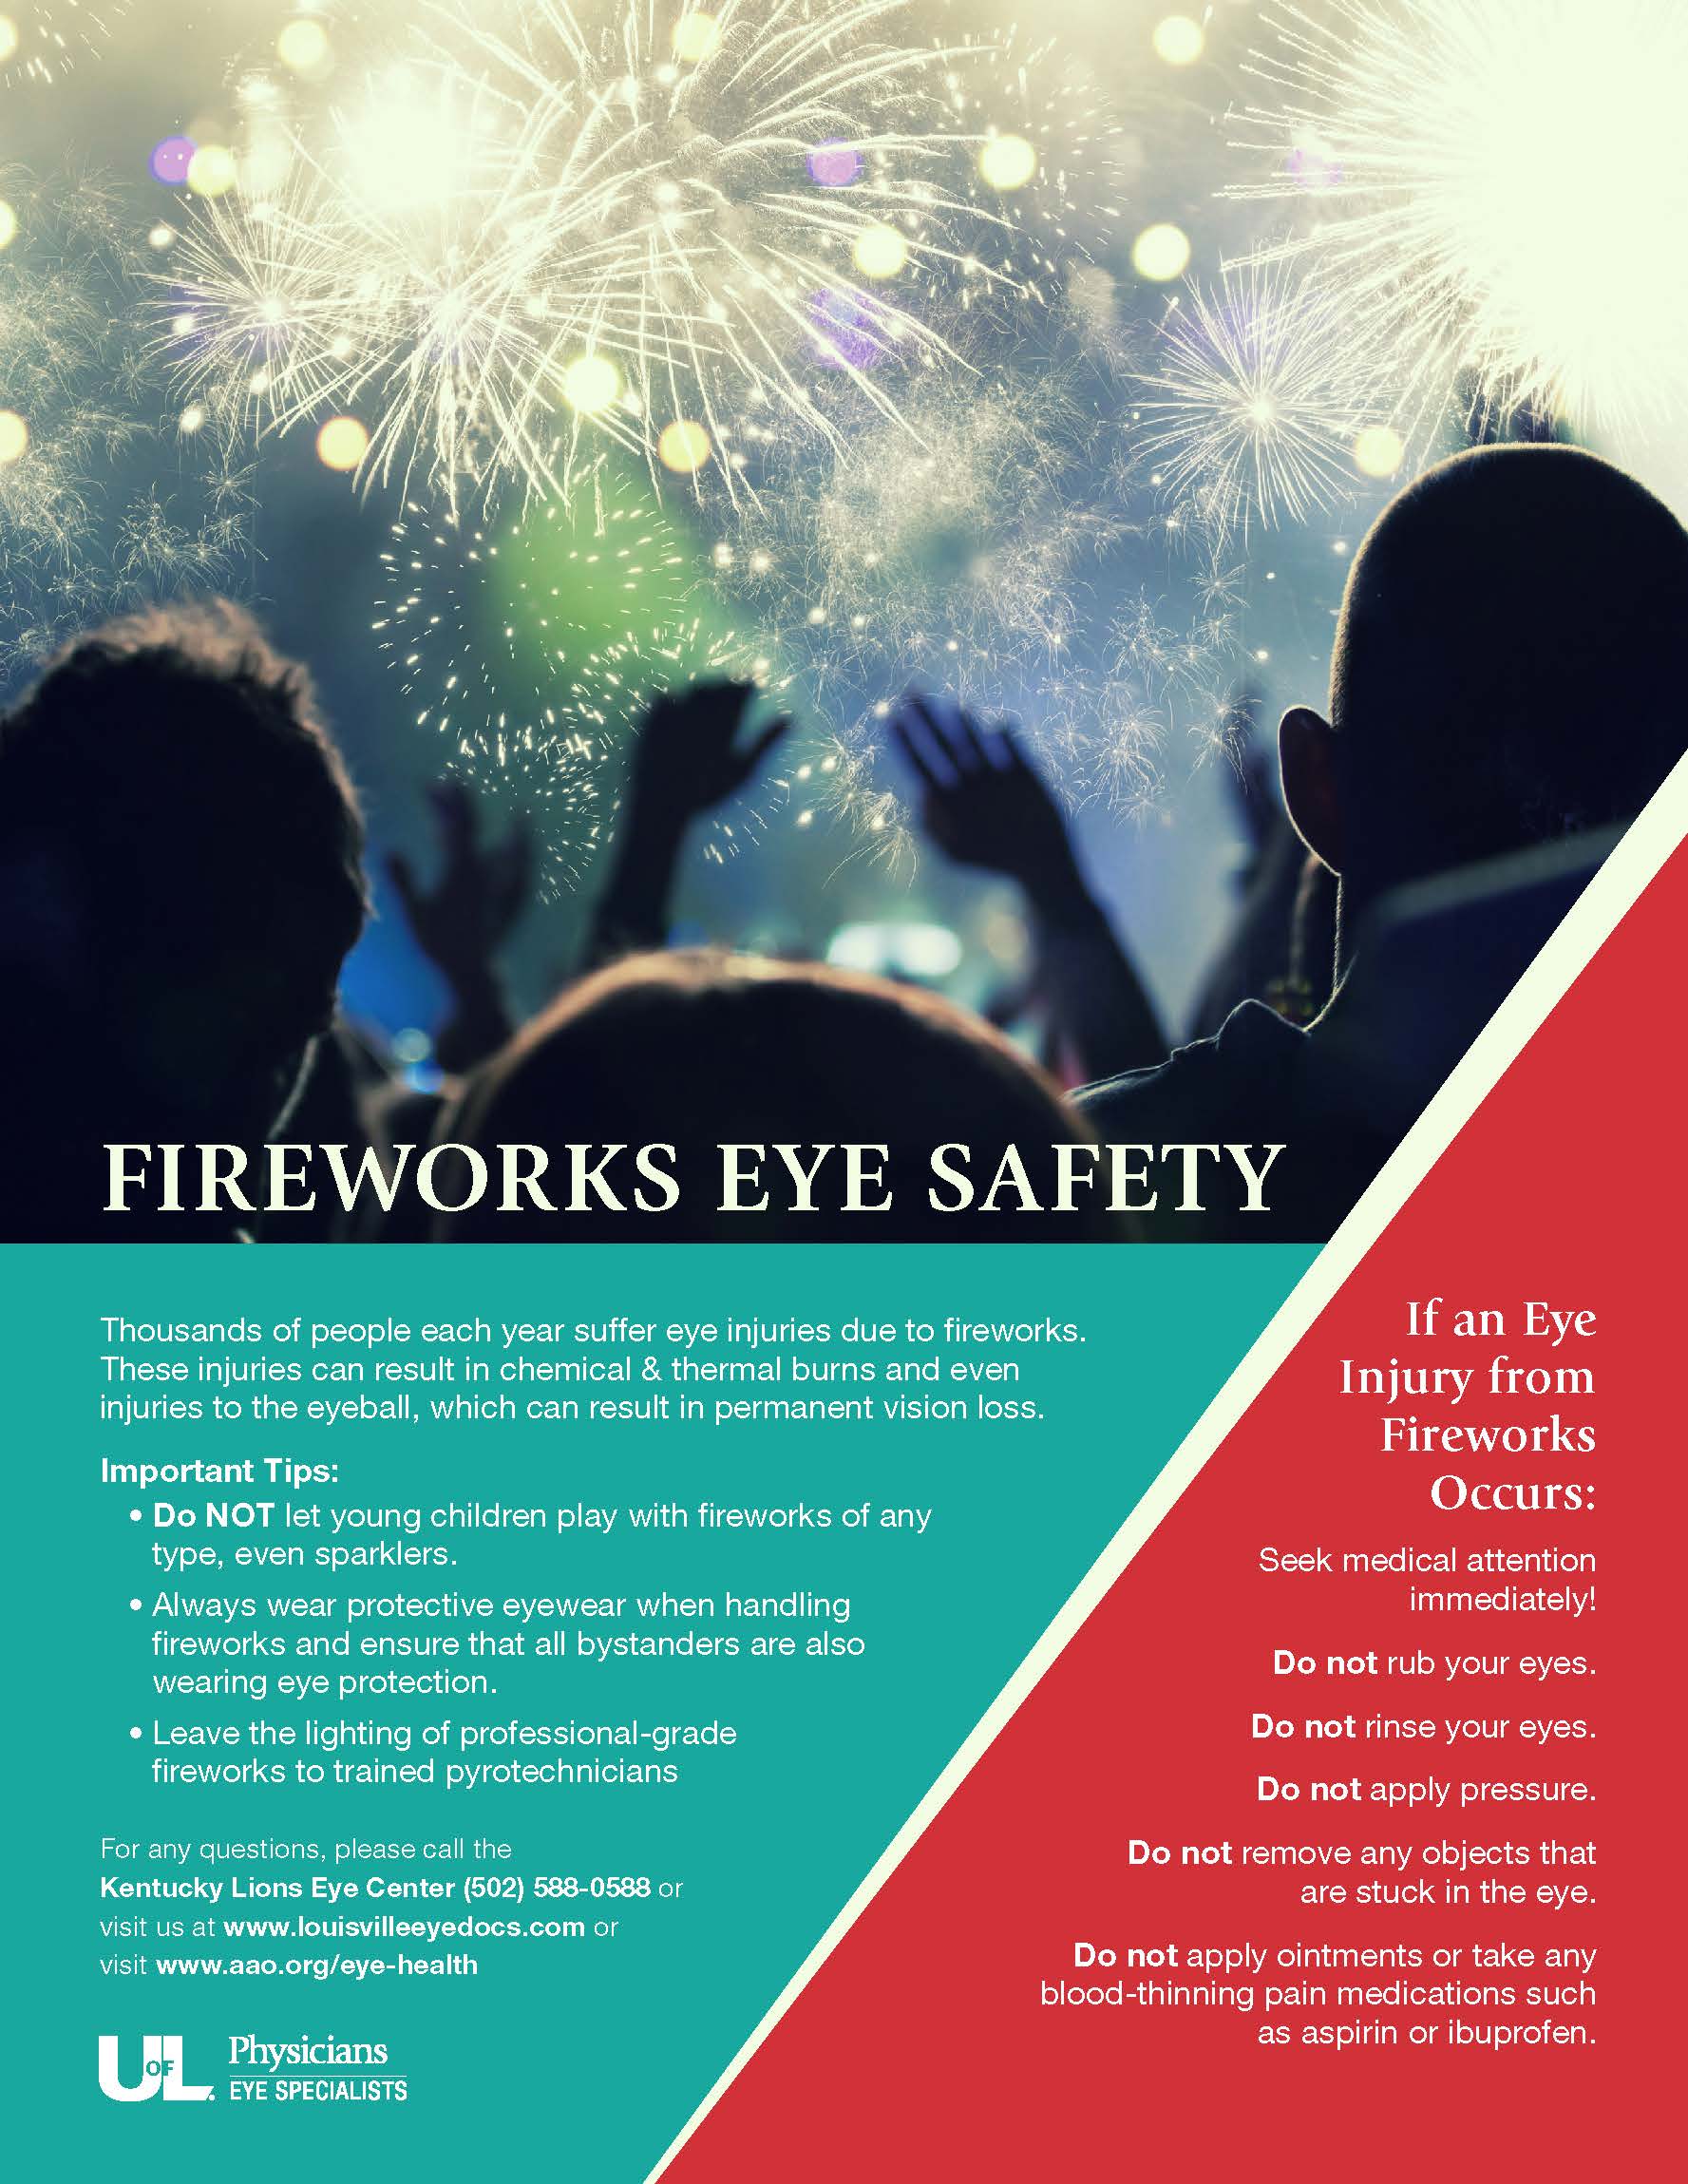 Fireworks Eye Safety Guide